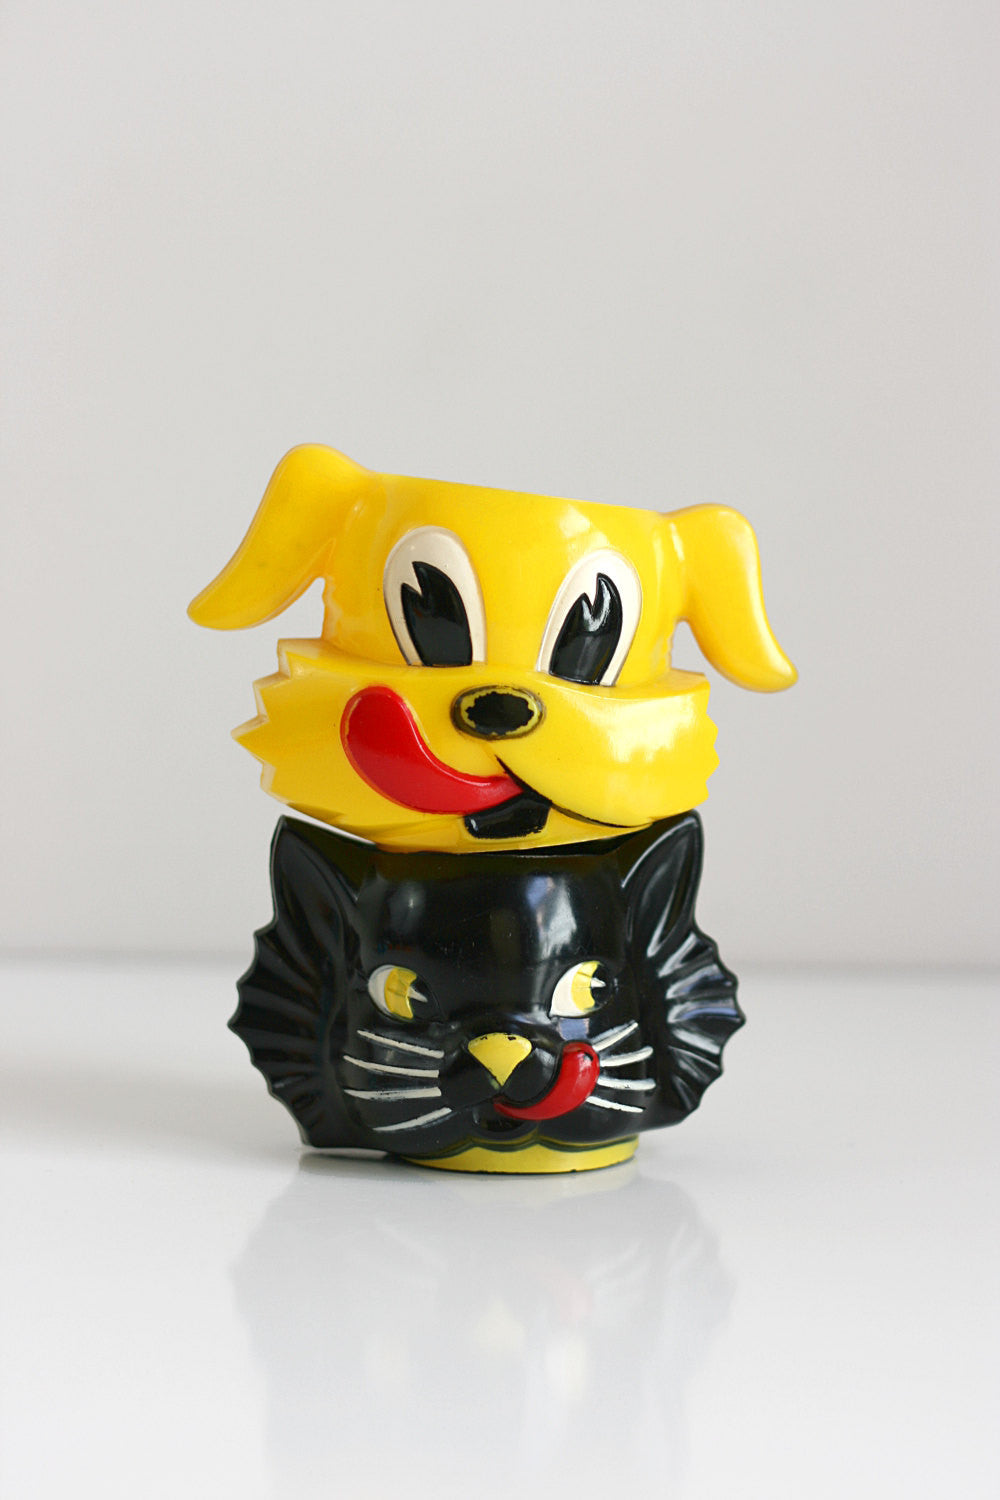 SOLD - Vintage 1950s Ken-L-Ration Cat and Dog Sugar and Cream Set